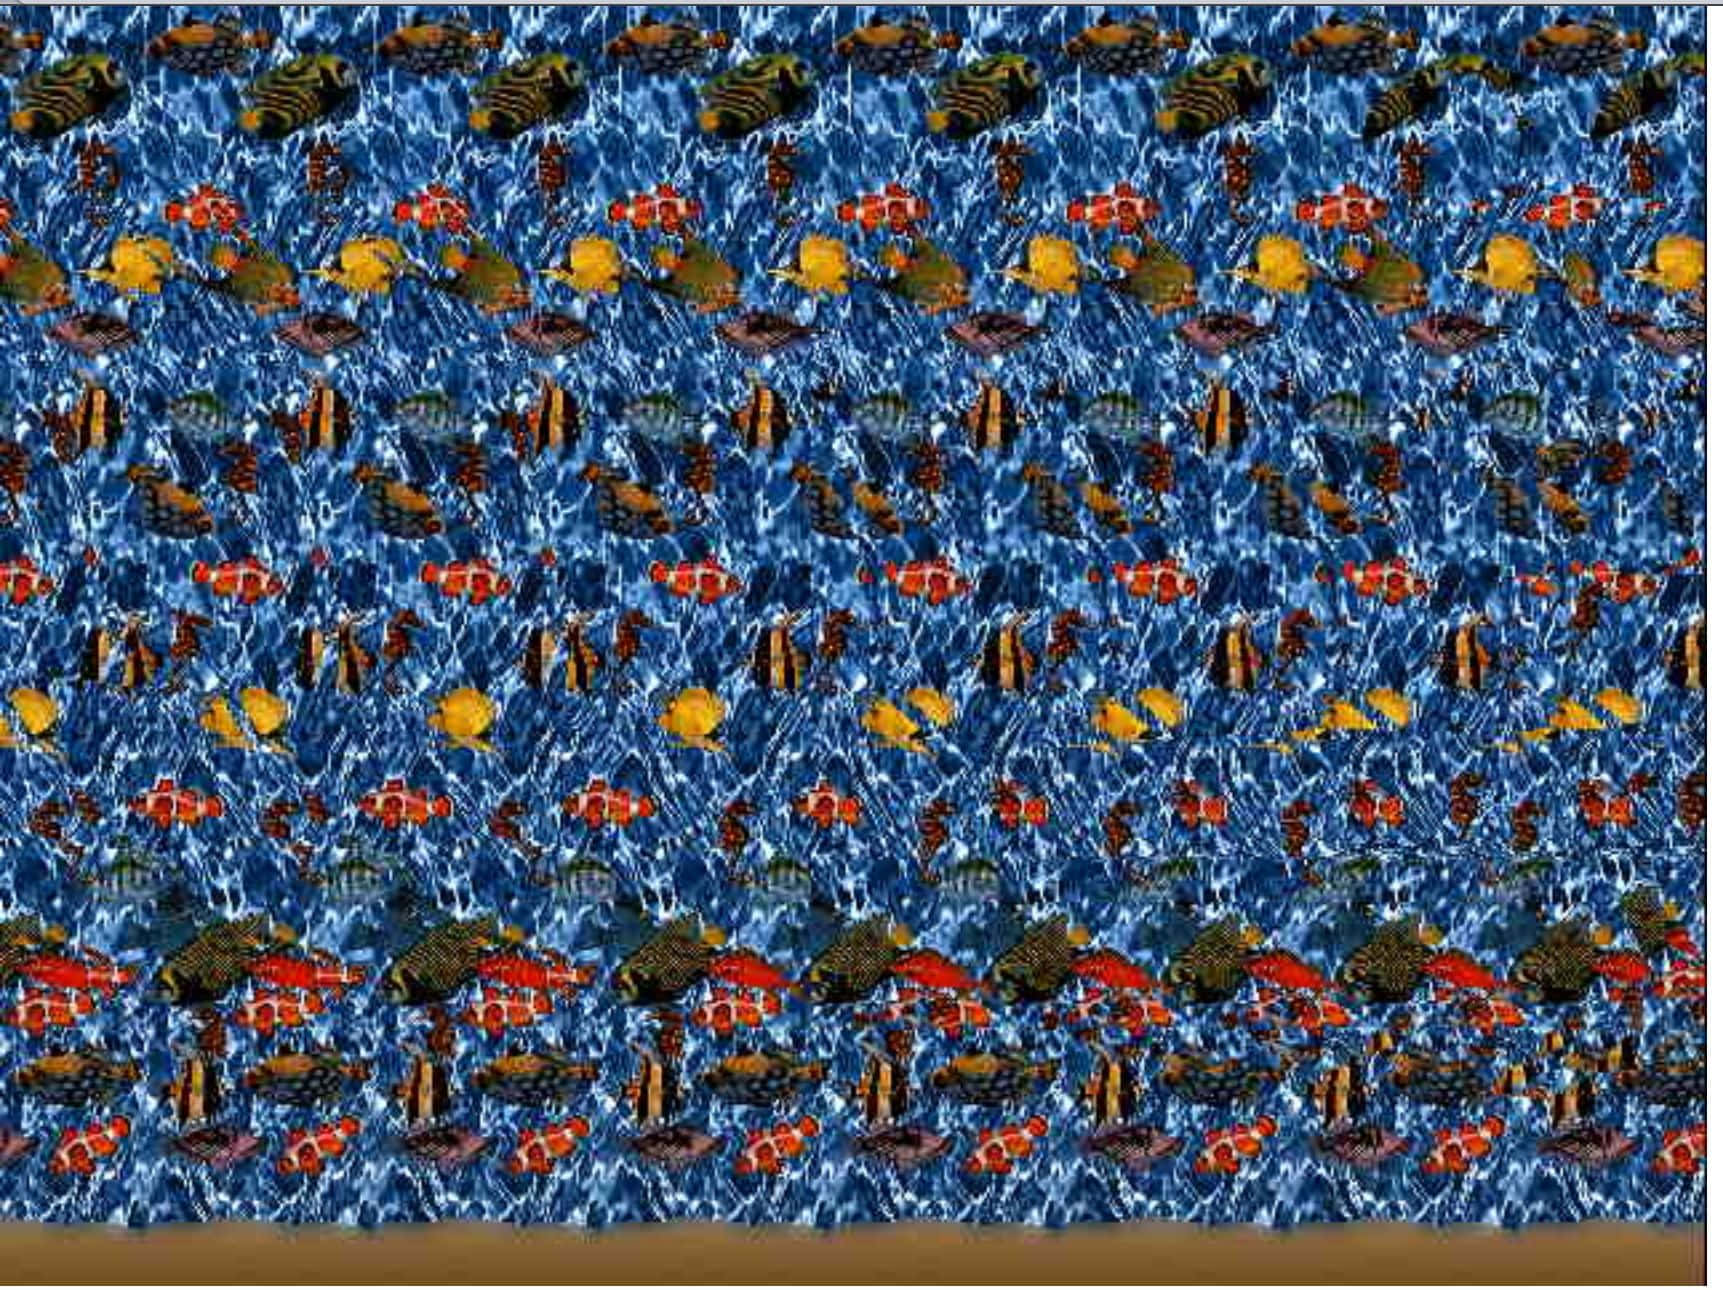 Oceanclownfish Magisches Auge 3d Stereogramm Bild